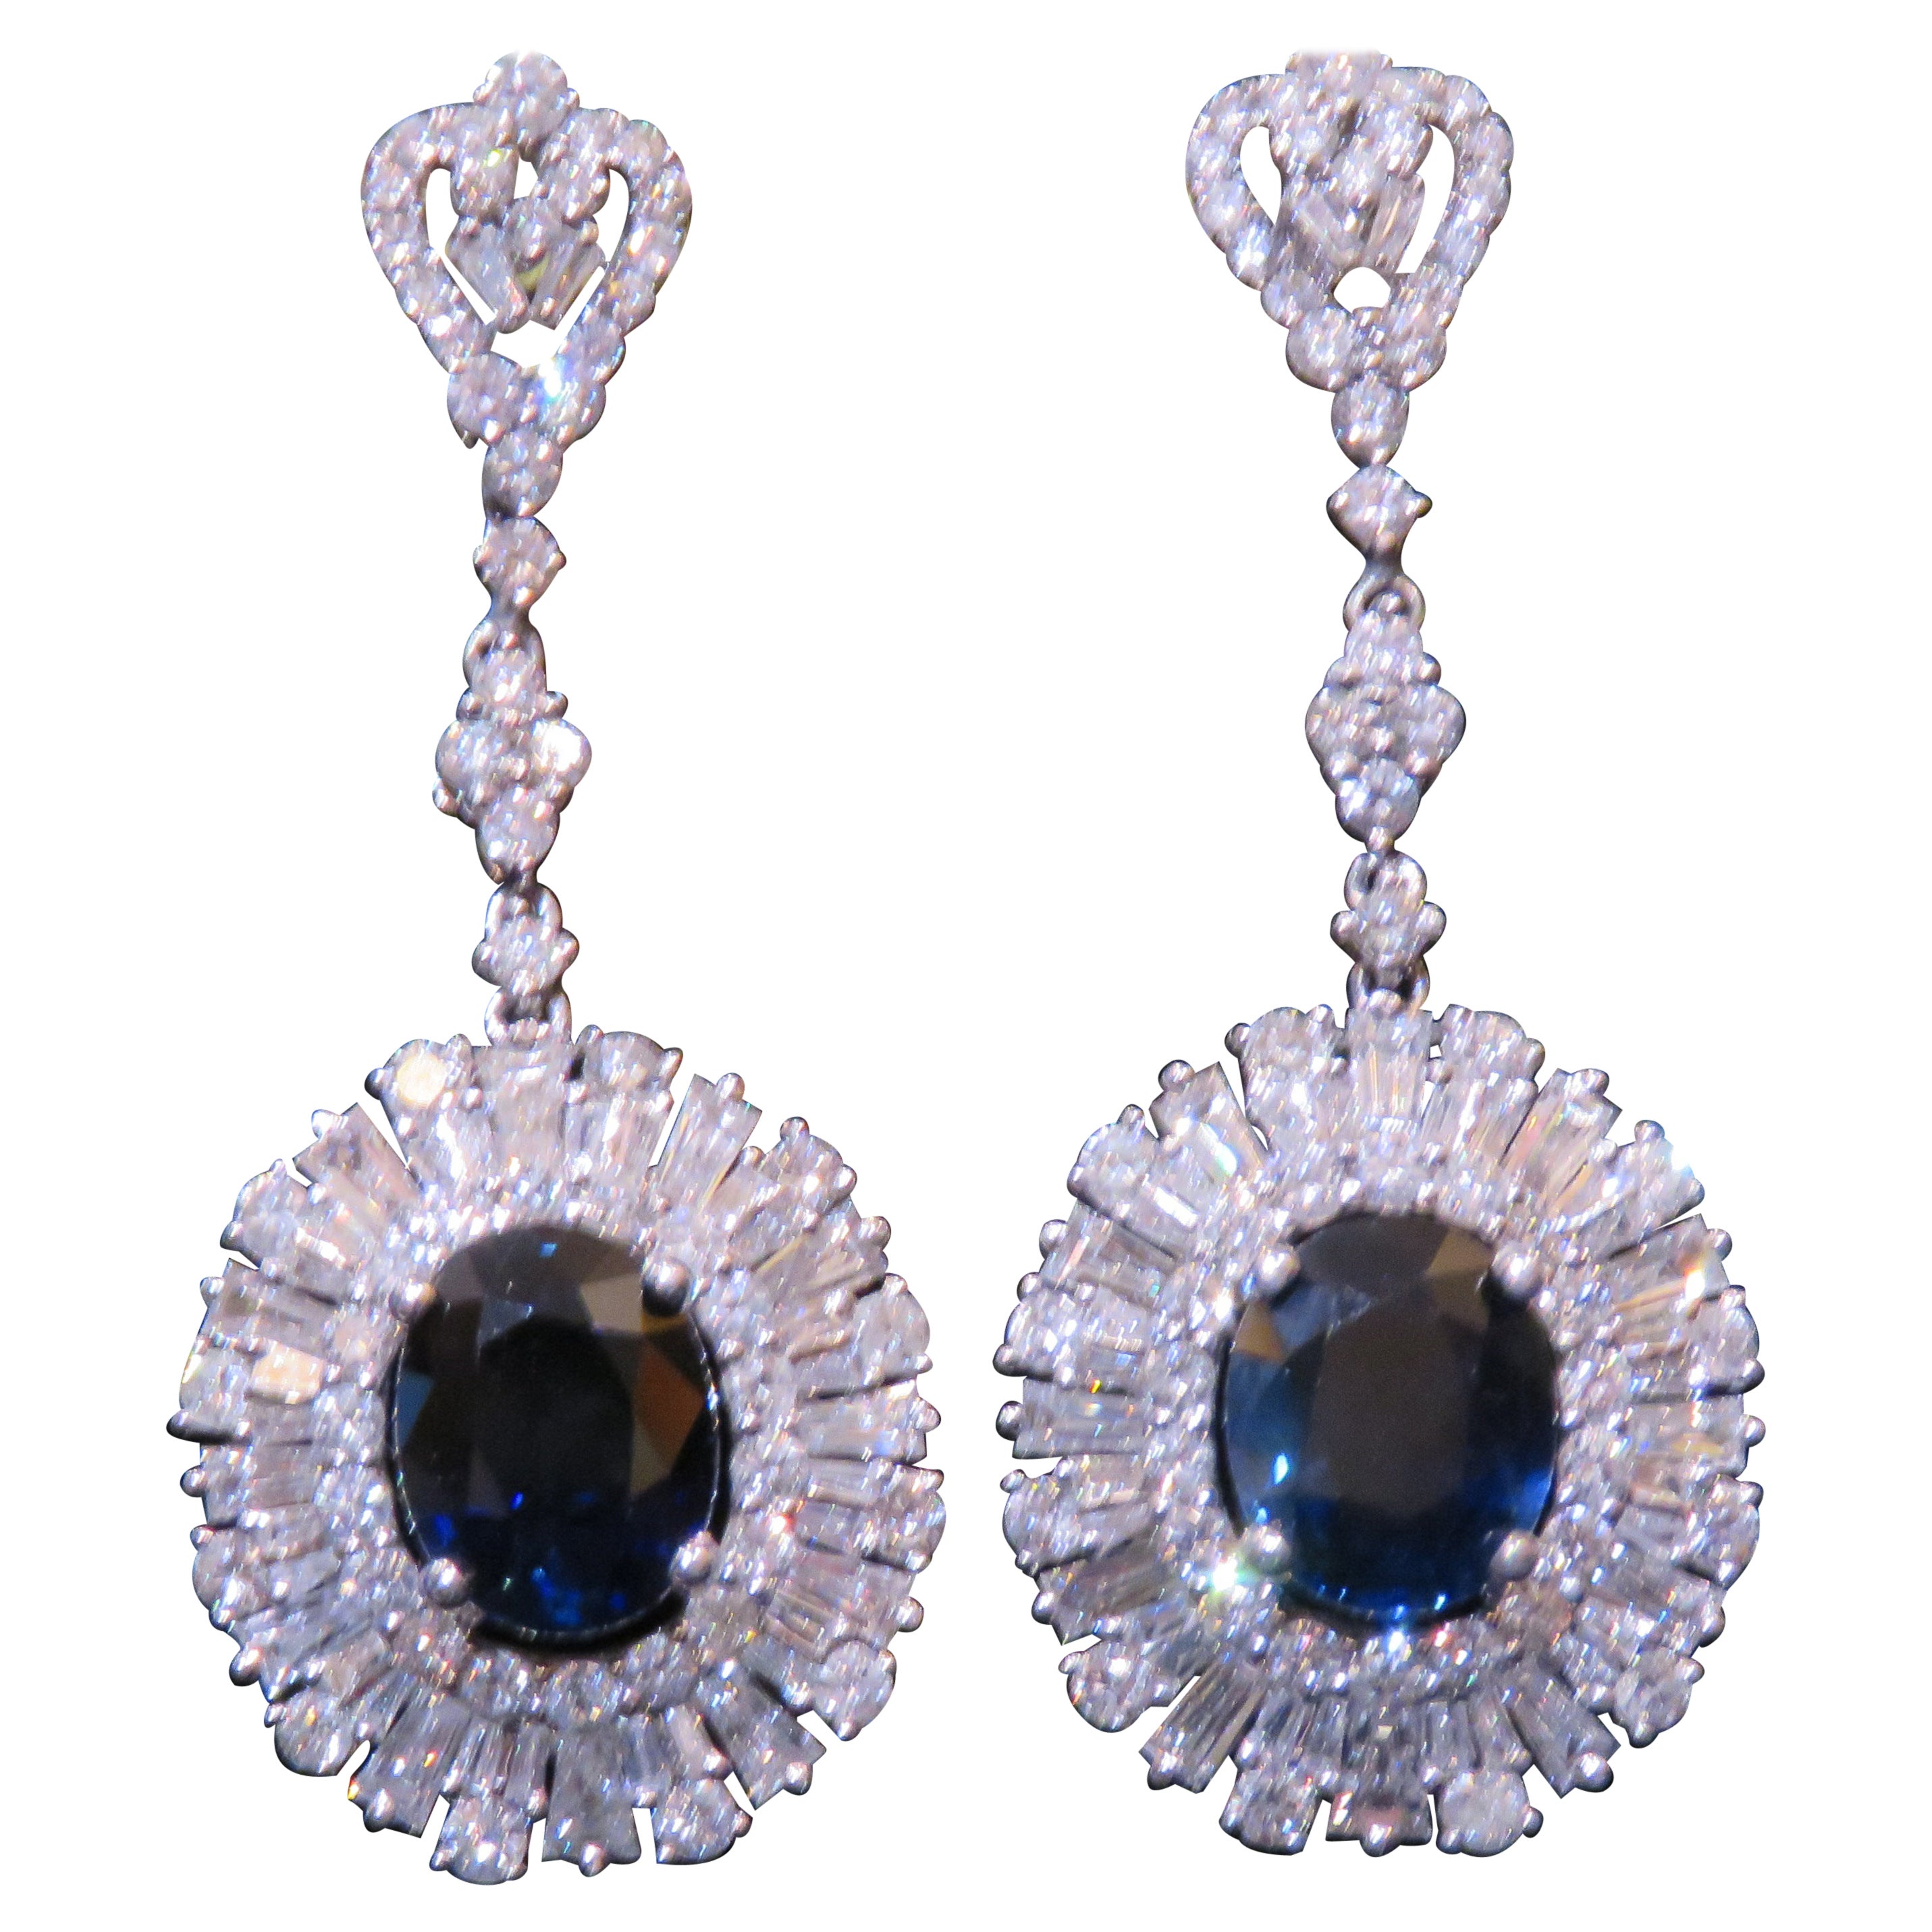 NWT $26,400 18KT Fancy große glitzernde Fancy 10CT Saphir-Diamant-Ohrringe